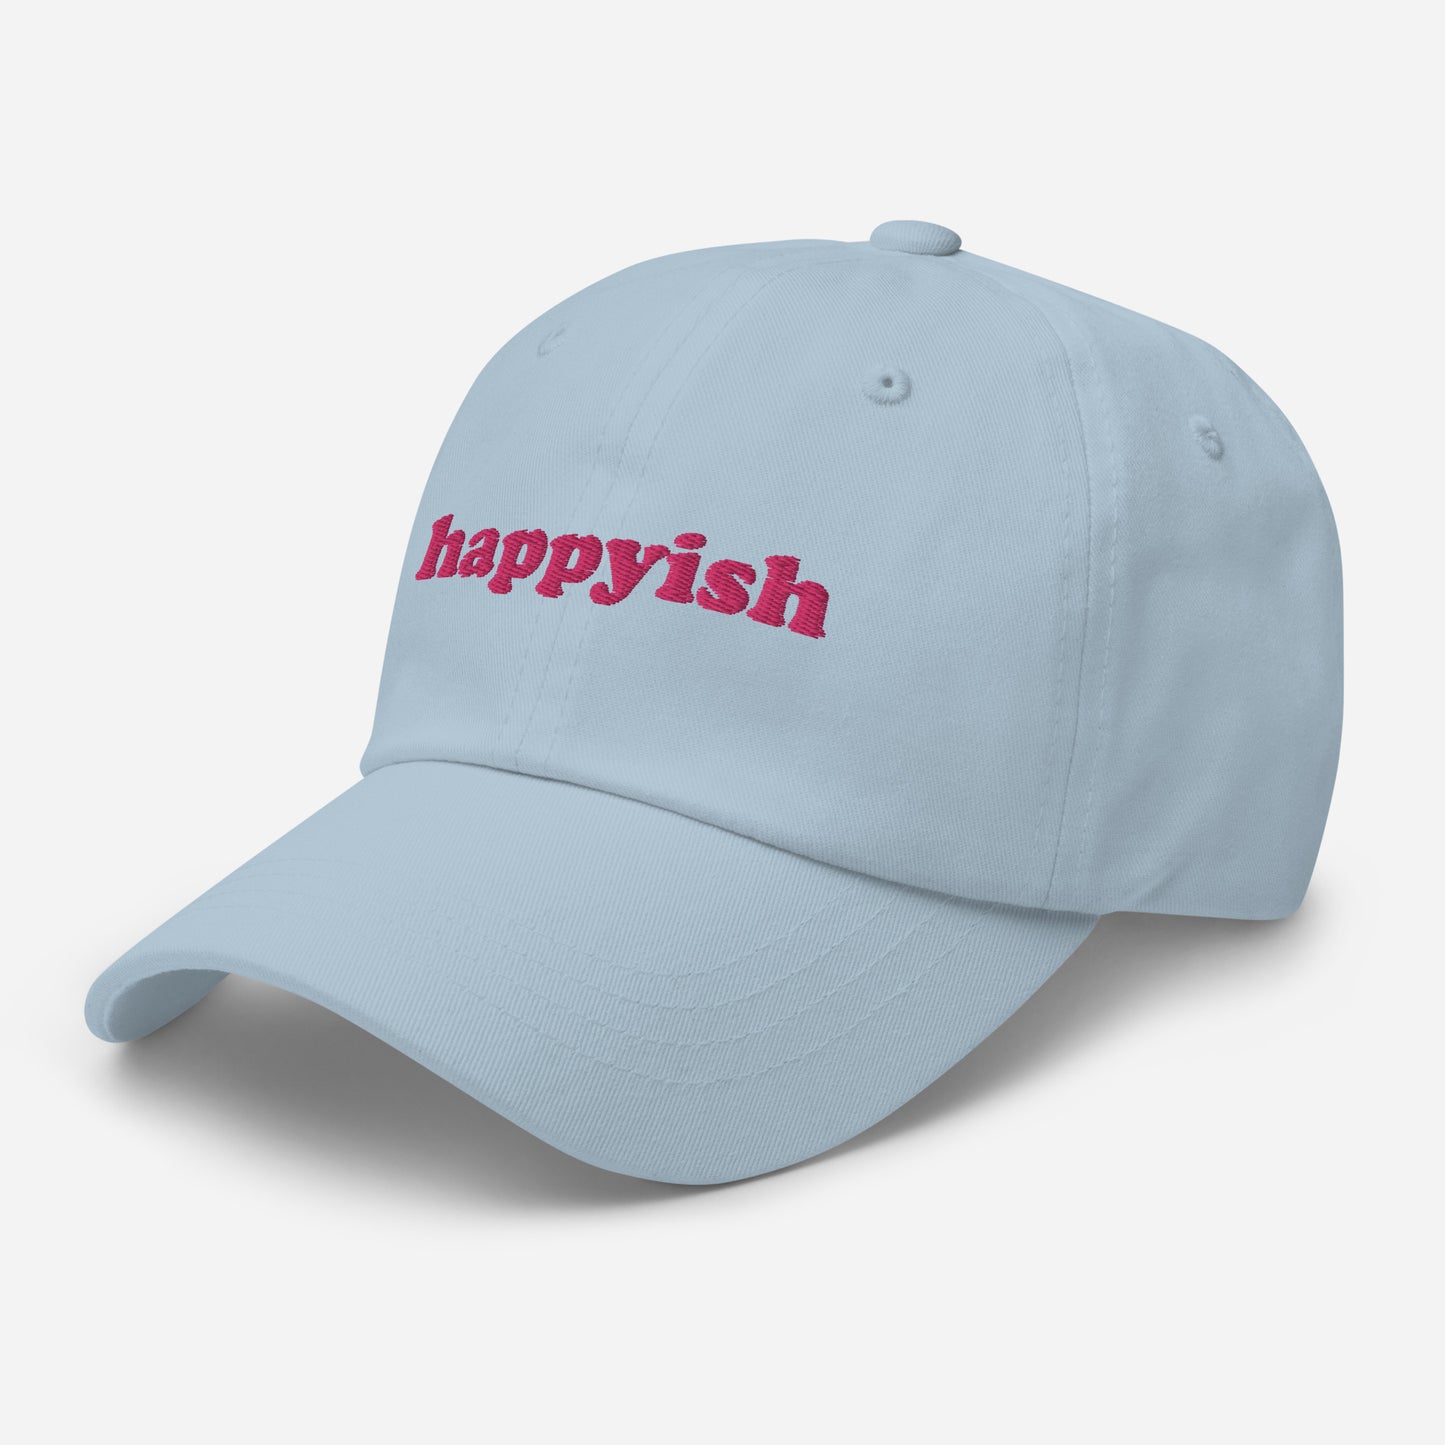 Feelings Hat - Happyish